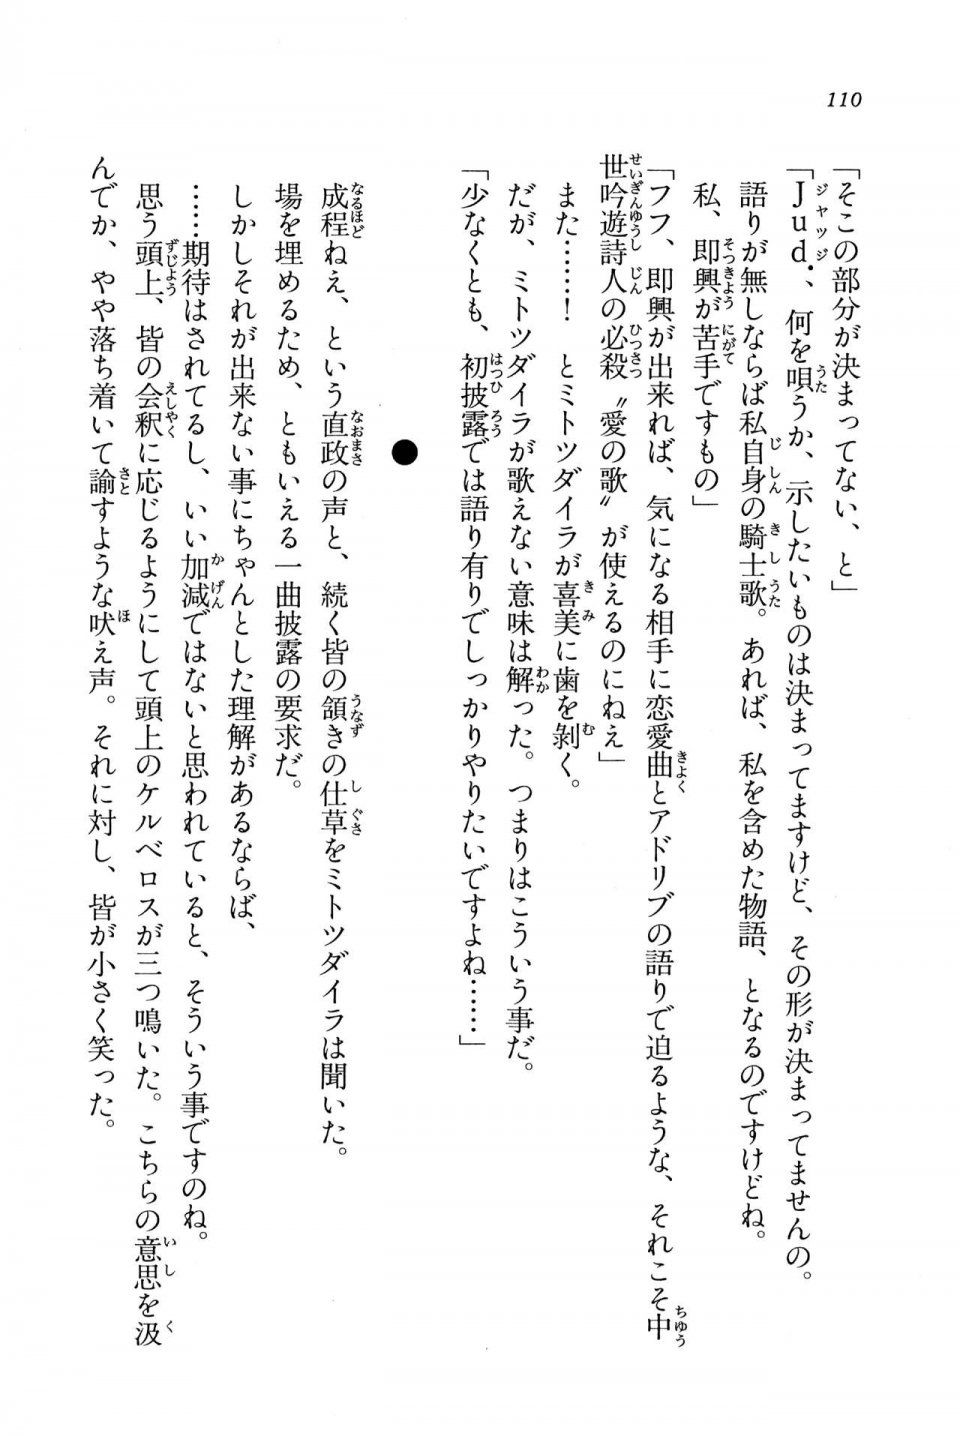 Kyoukai Senjou no Horizon BD Special Mininovel Vol 7(4A) - Photo #114